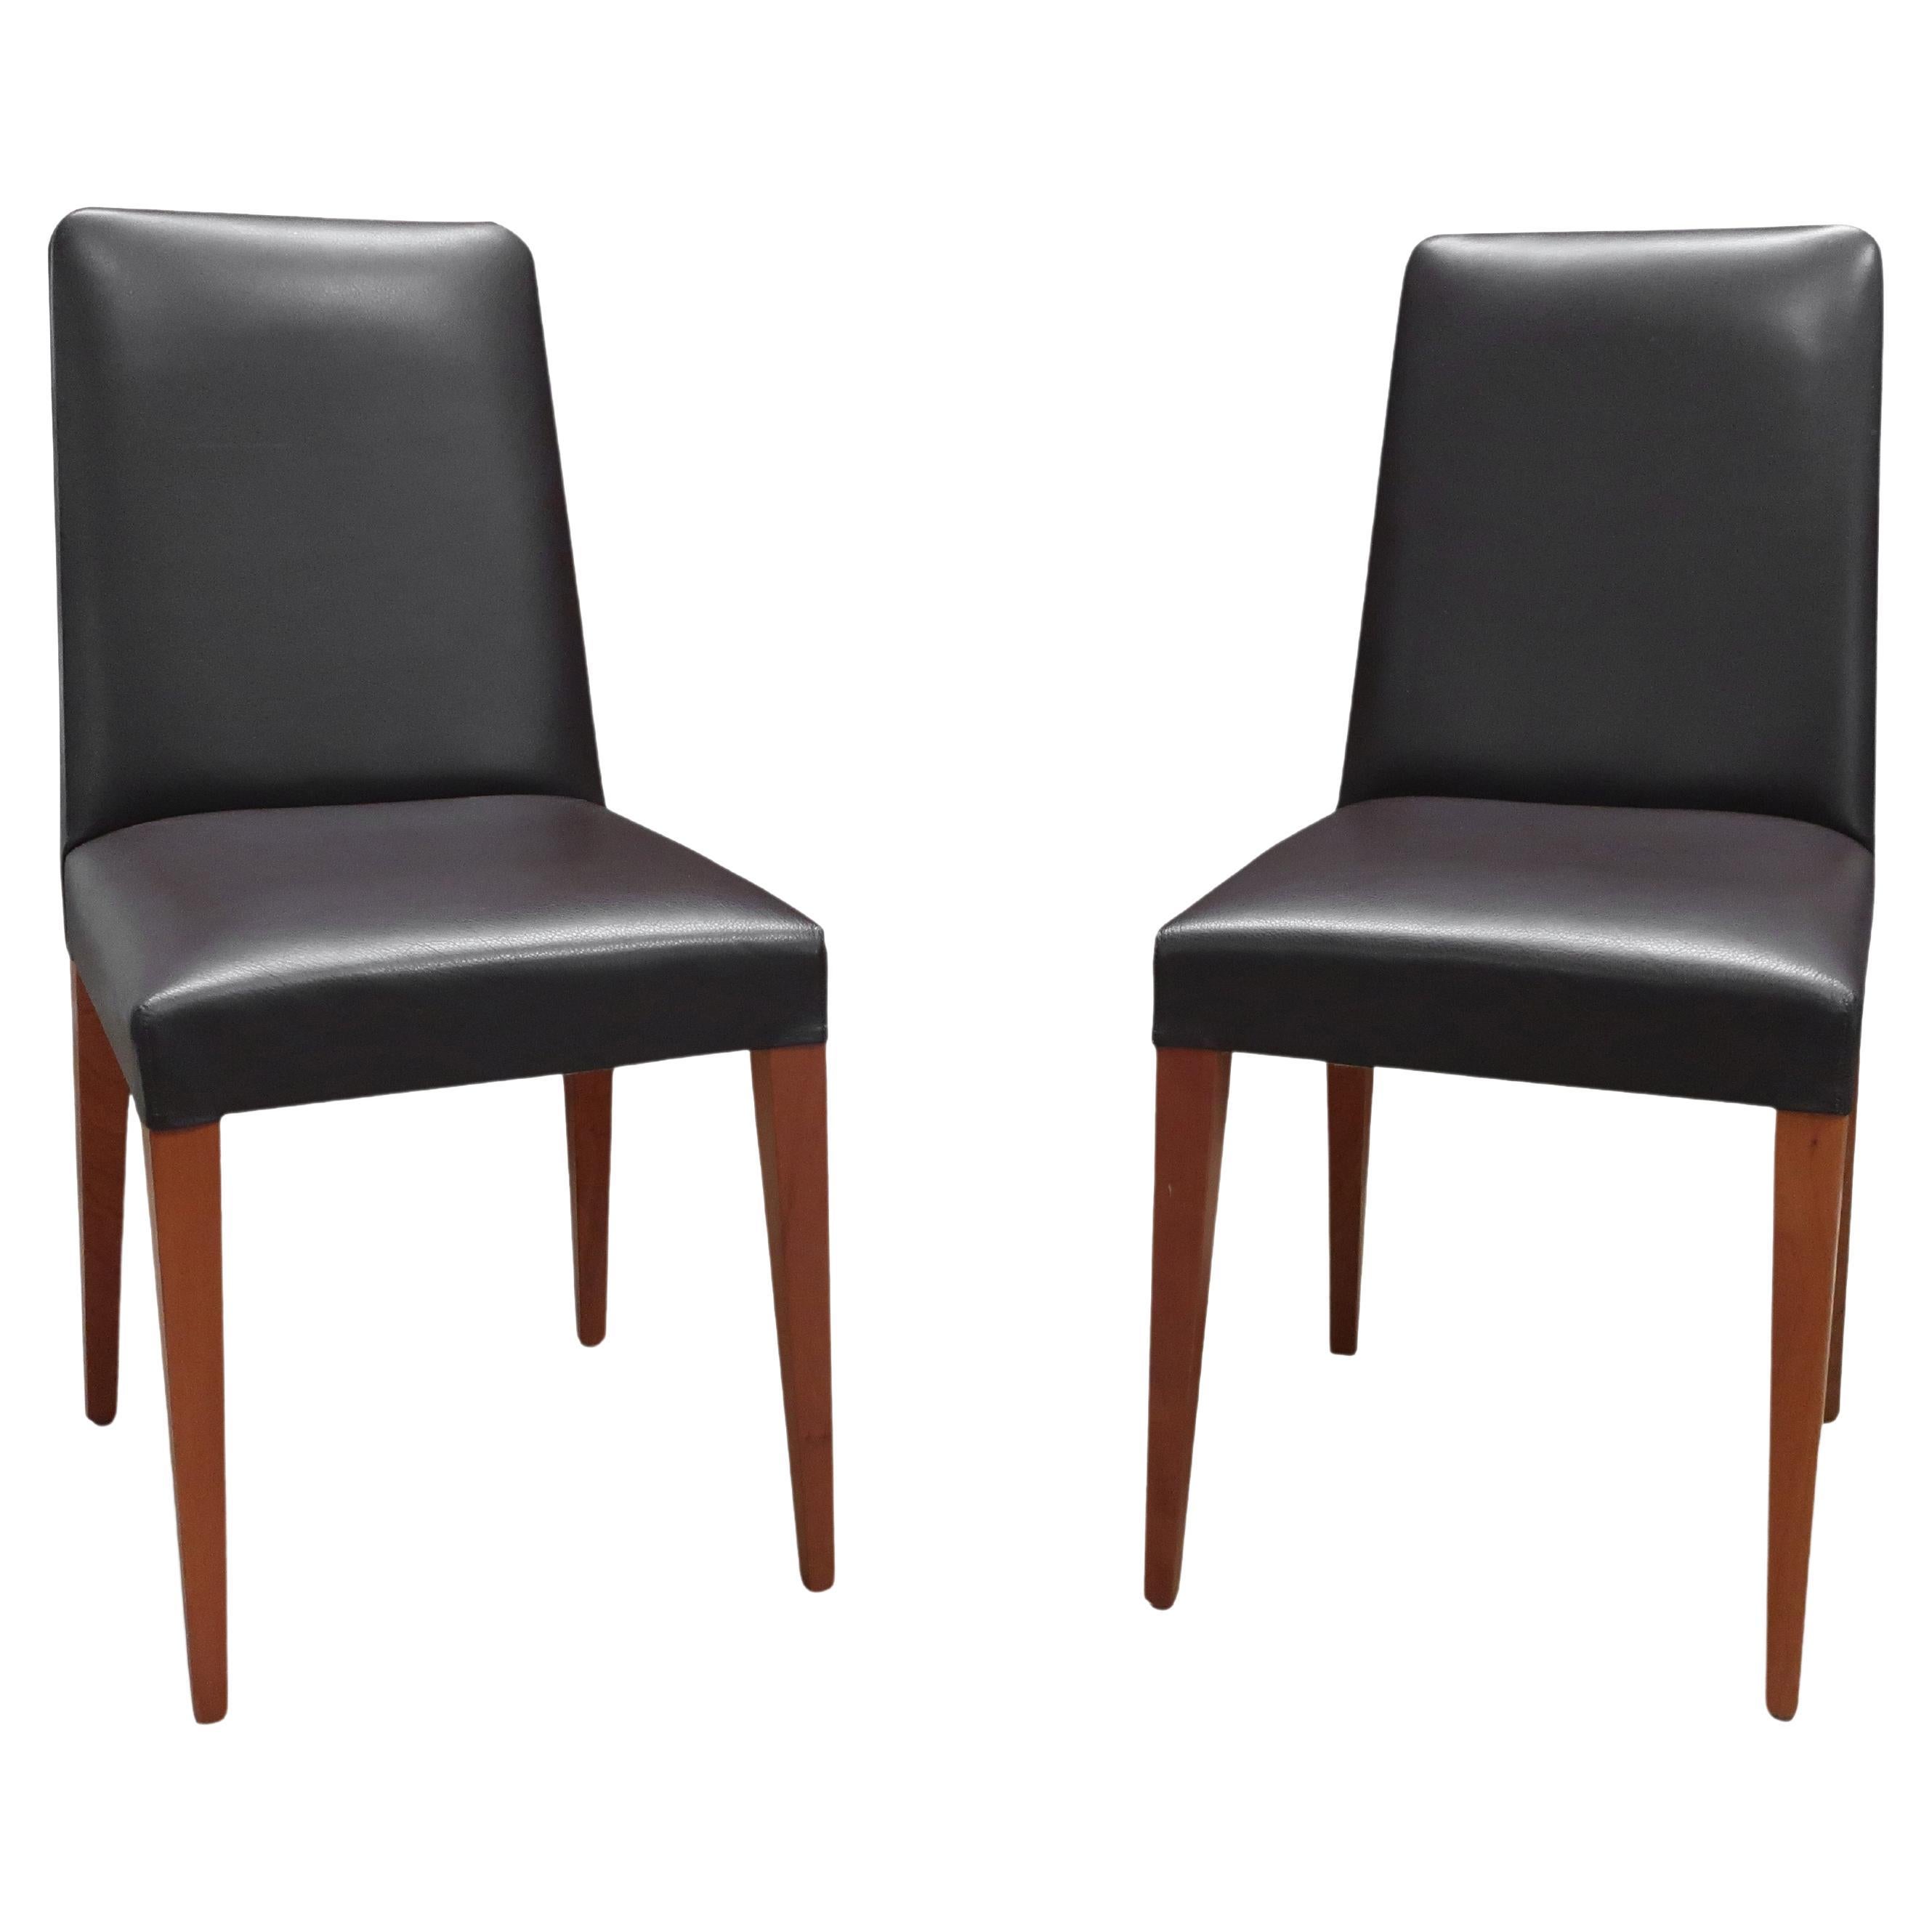 Paire de chaises « Classic Chair » en cuir marron de Roberto Lazzeroni pour Ceccotti Collezio